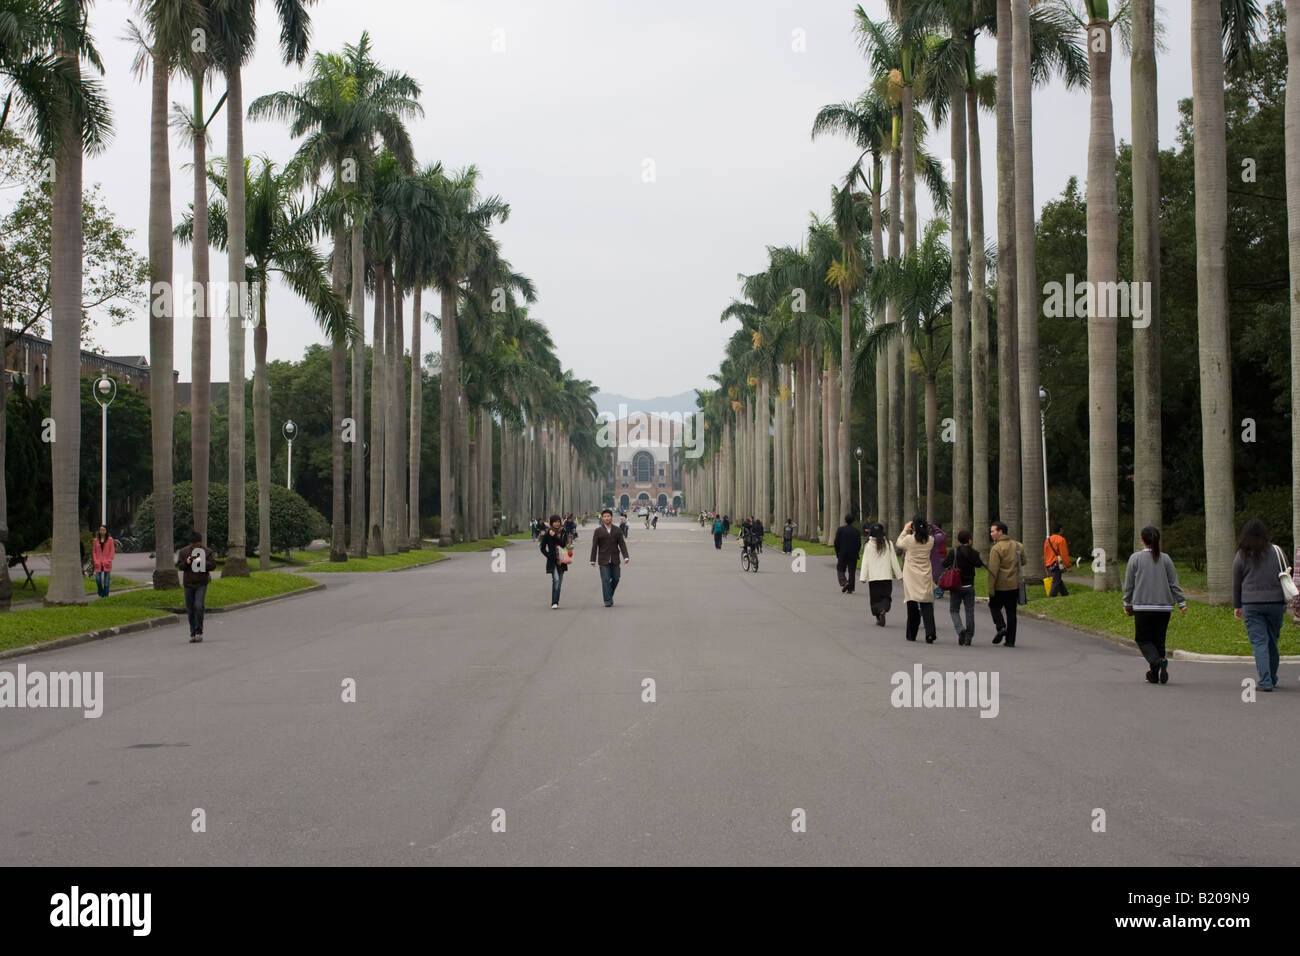 Avenue of royal palms leading to main library at National Taiwan University (NTU) Tai-da, Taipei Taiwan ROC Stock Photo